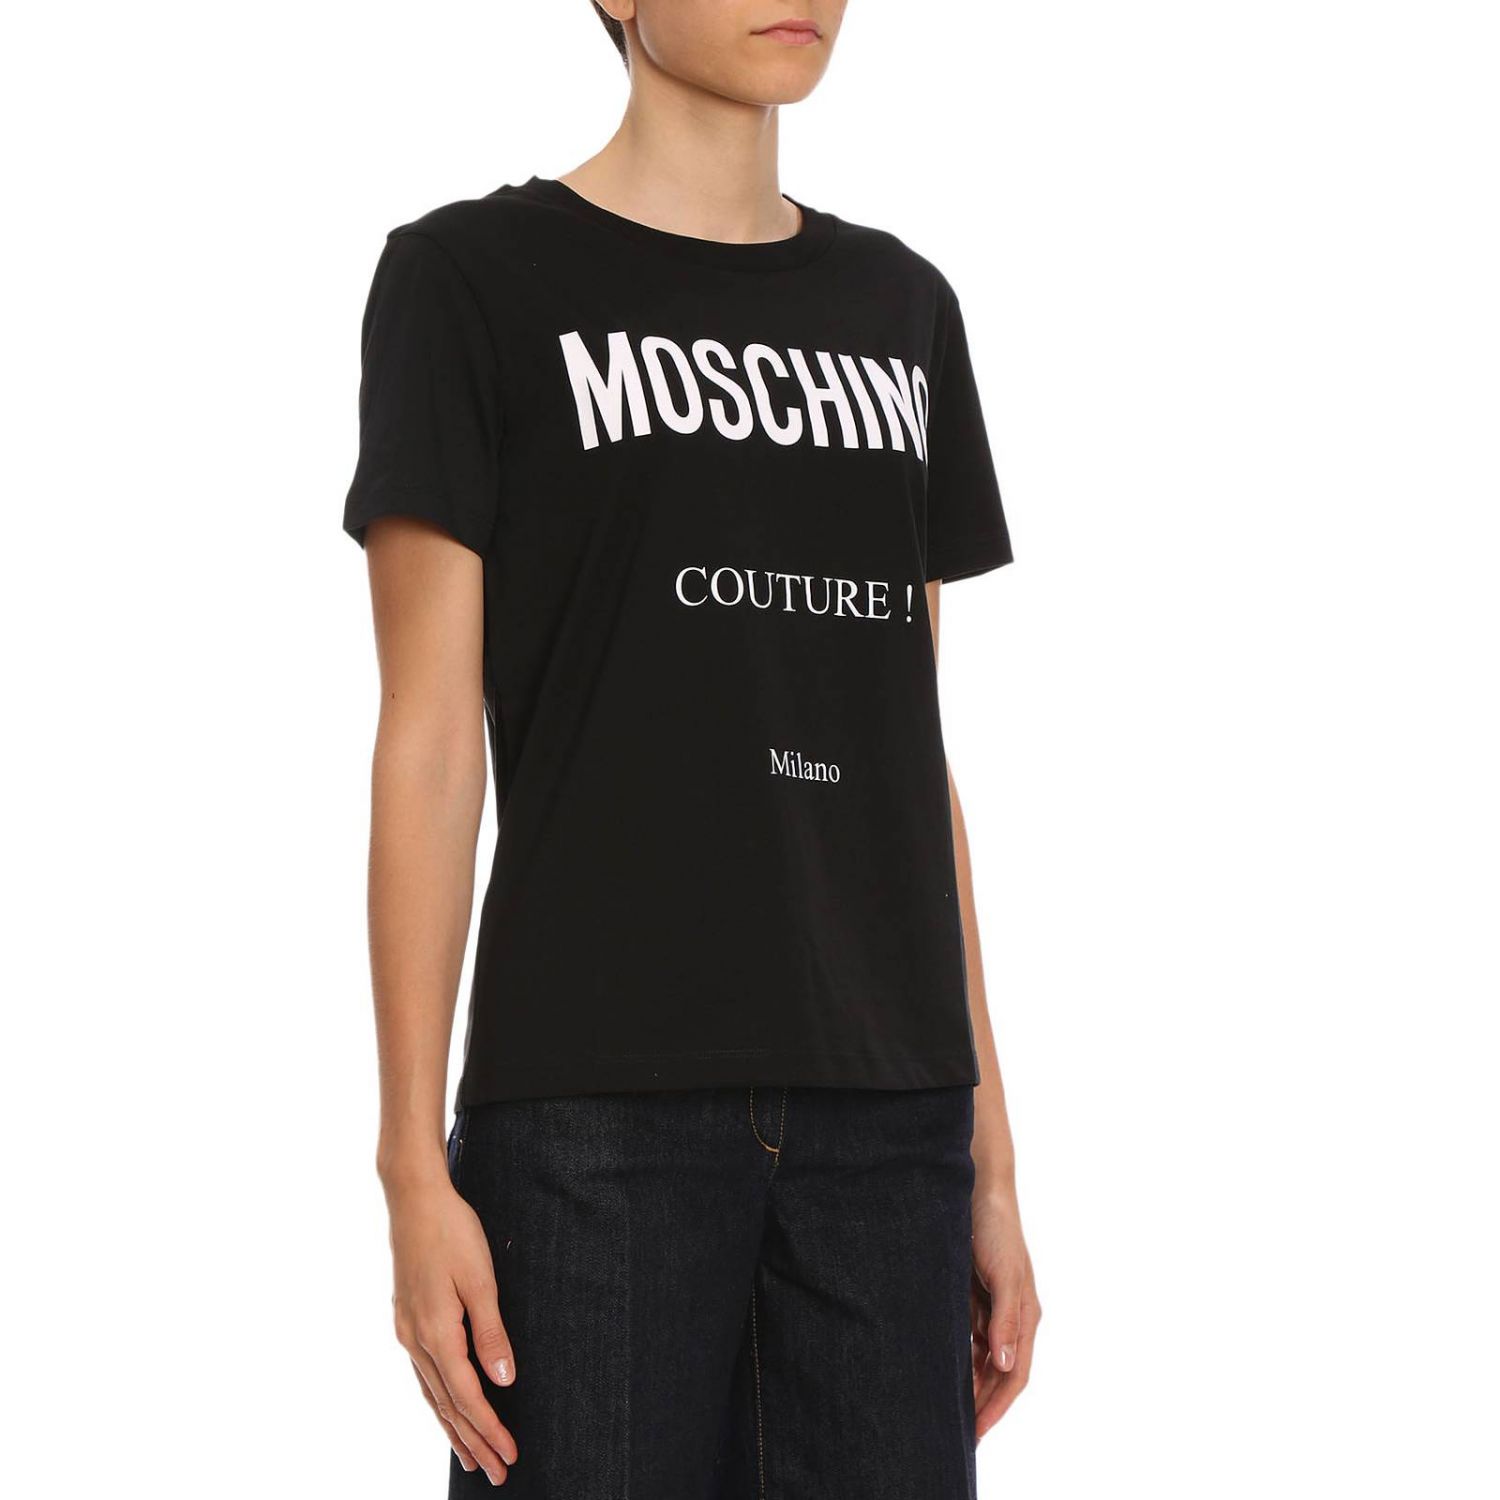 Moschino Couture Outlet: T-shirt women - Black | T-Shirt Moschino ...